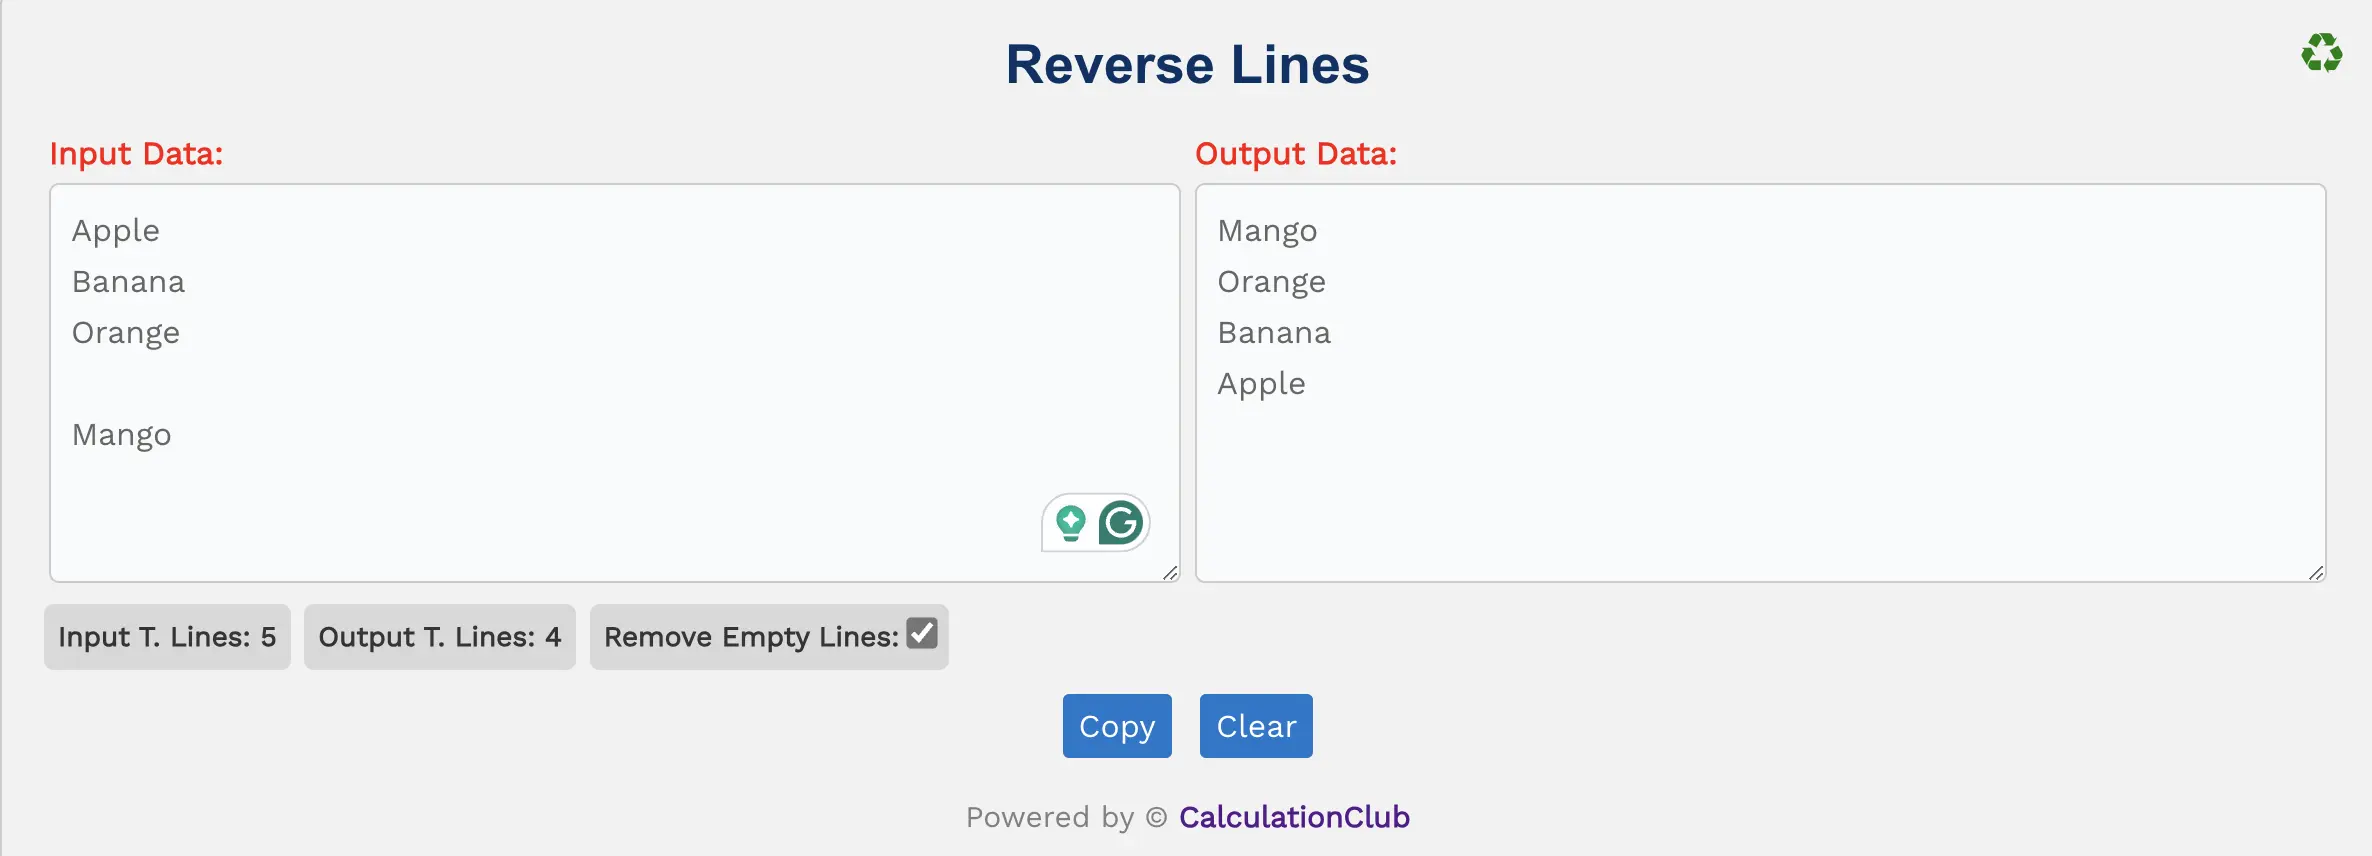 Reverse Lines | CalculationClub